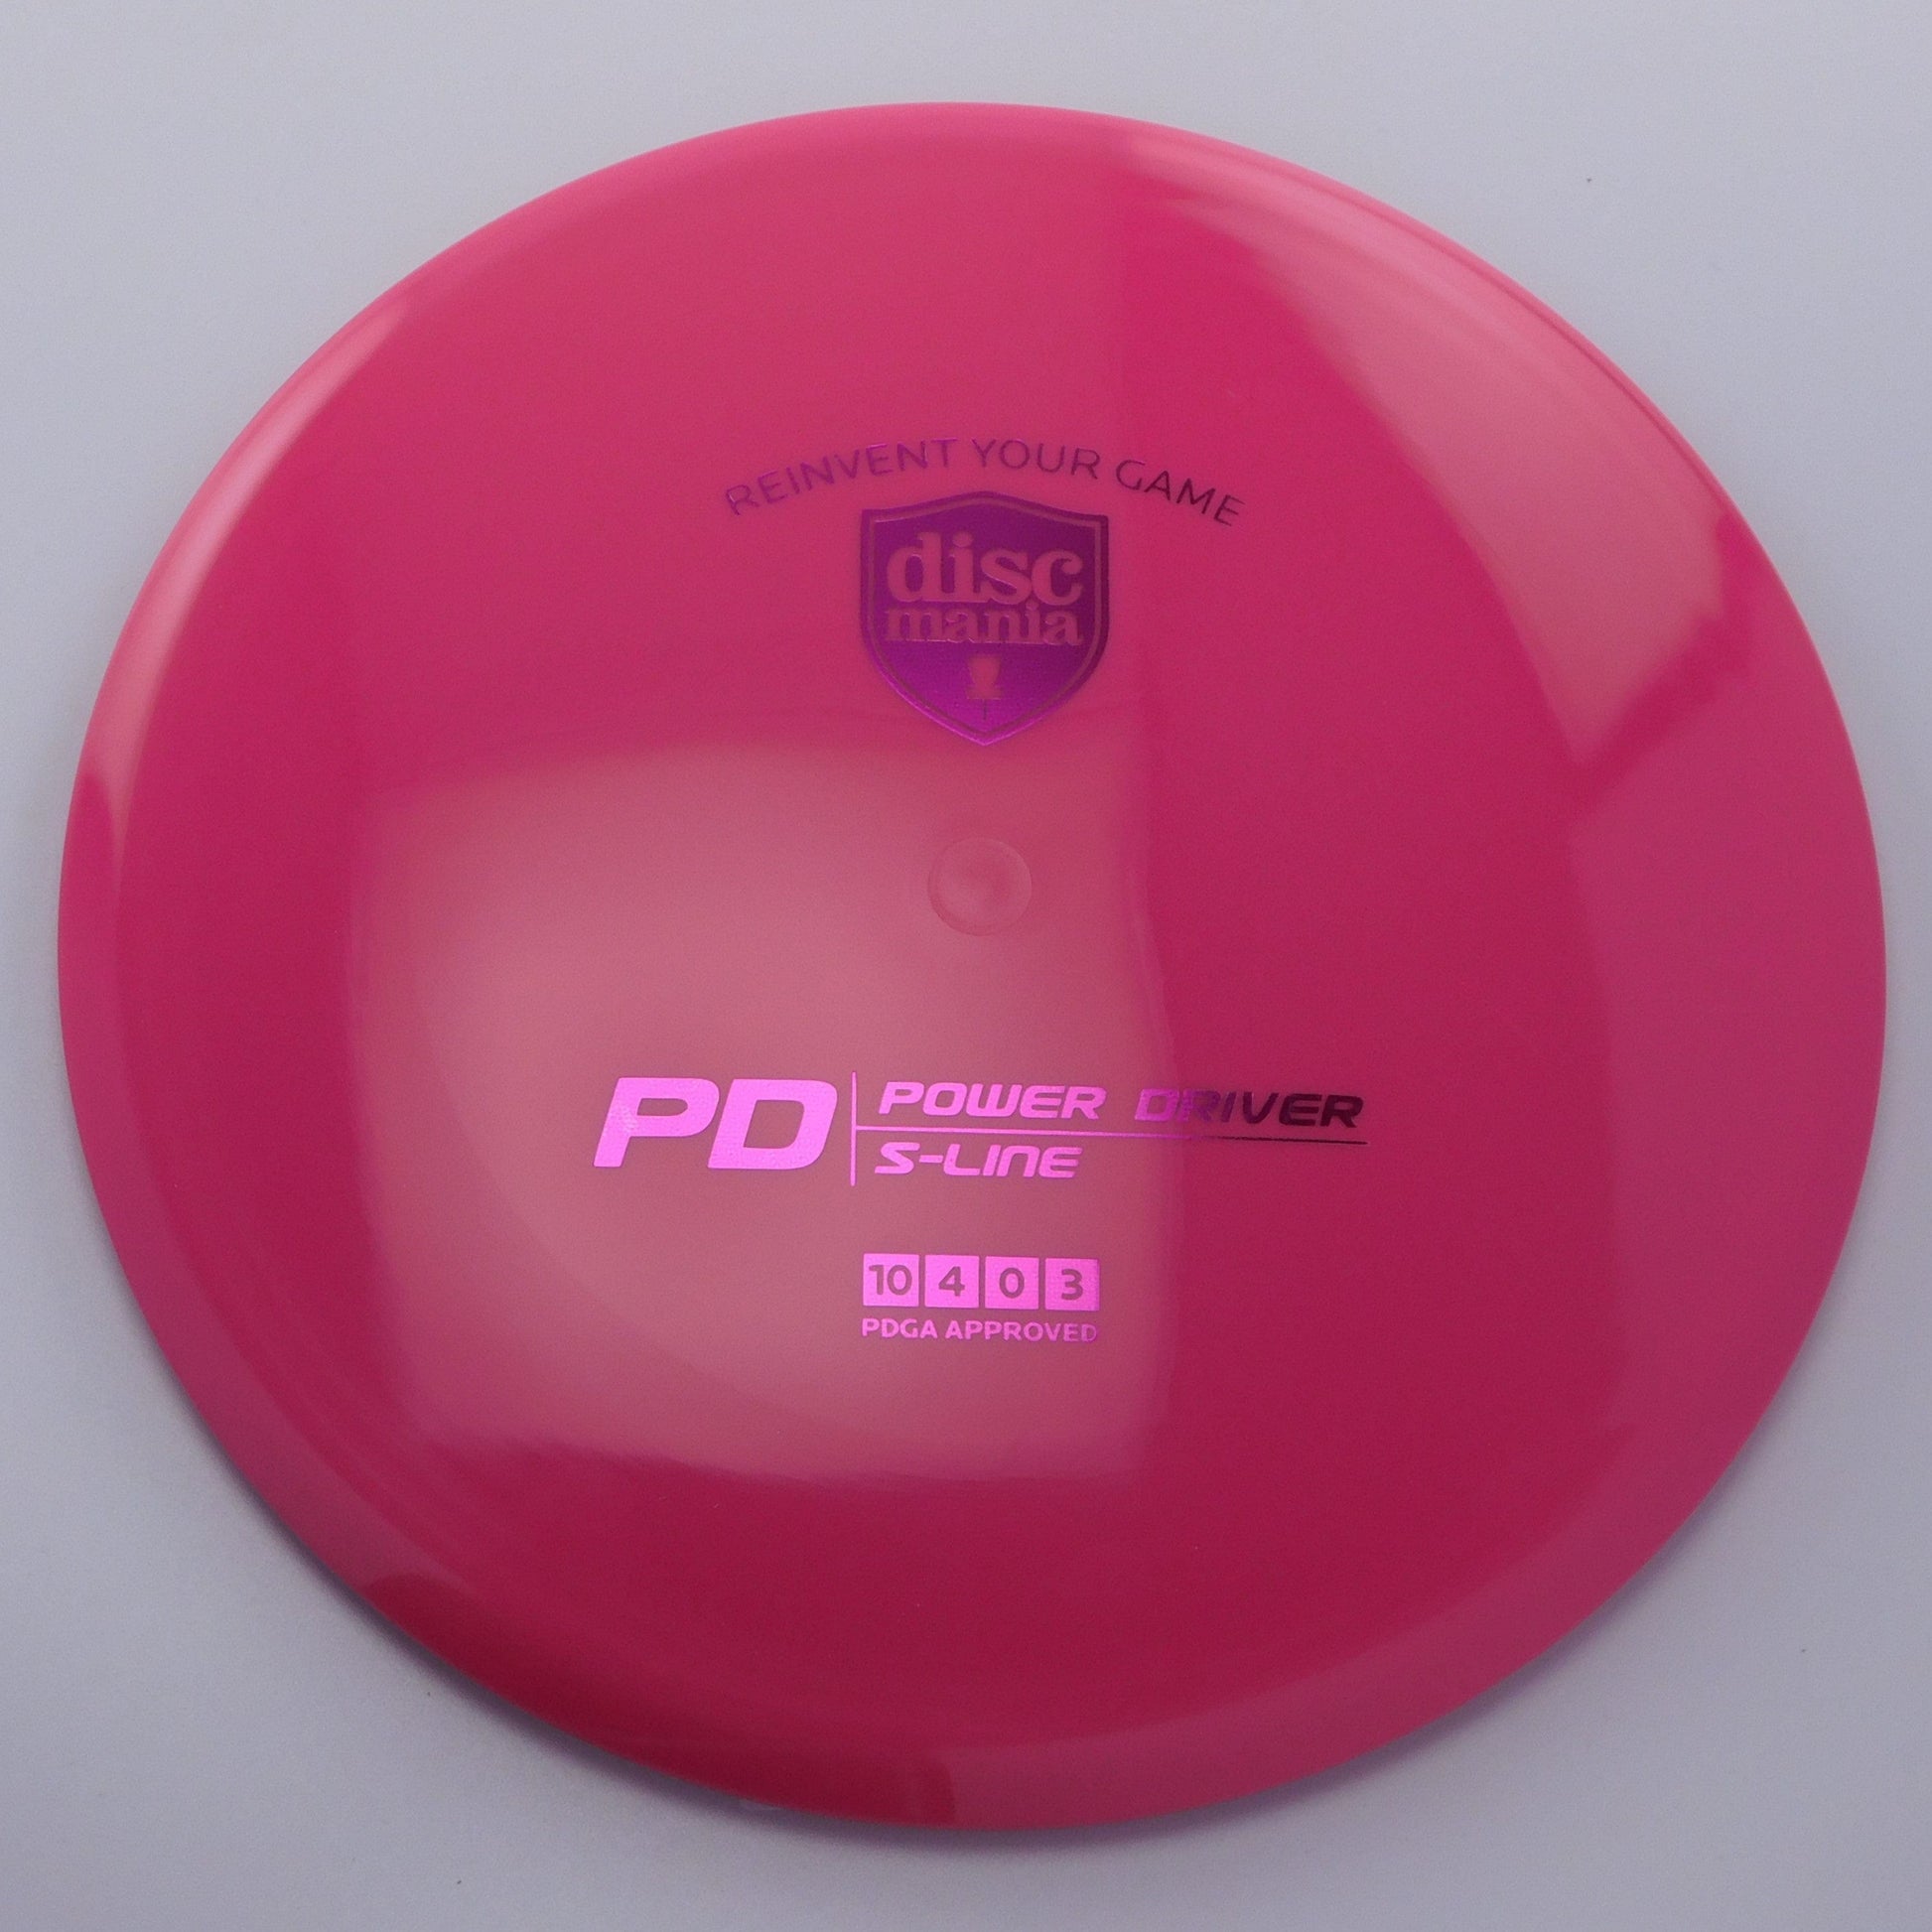 Discmania PD - S-line 10│4│0│3 175.8g - Pink - Discmania PD - S-Line - 100405